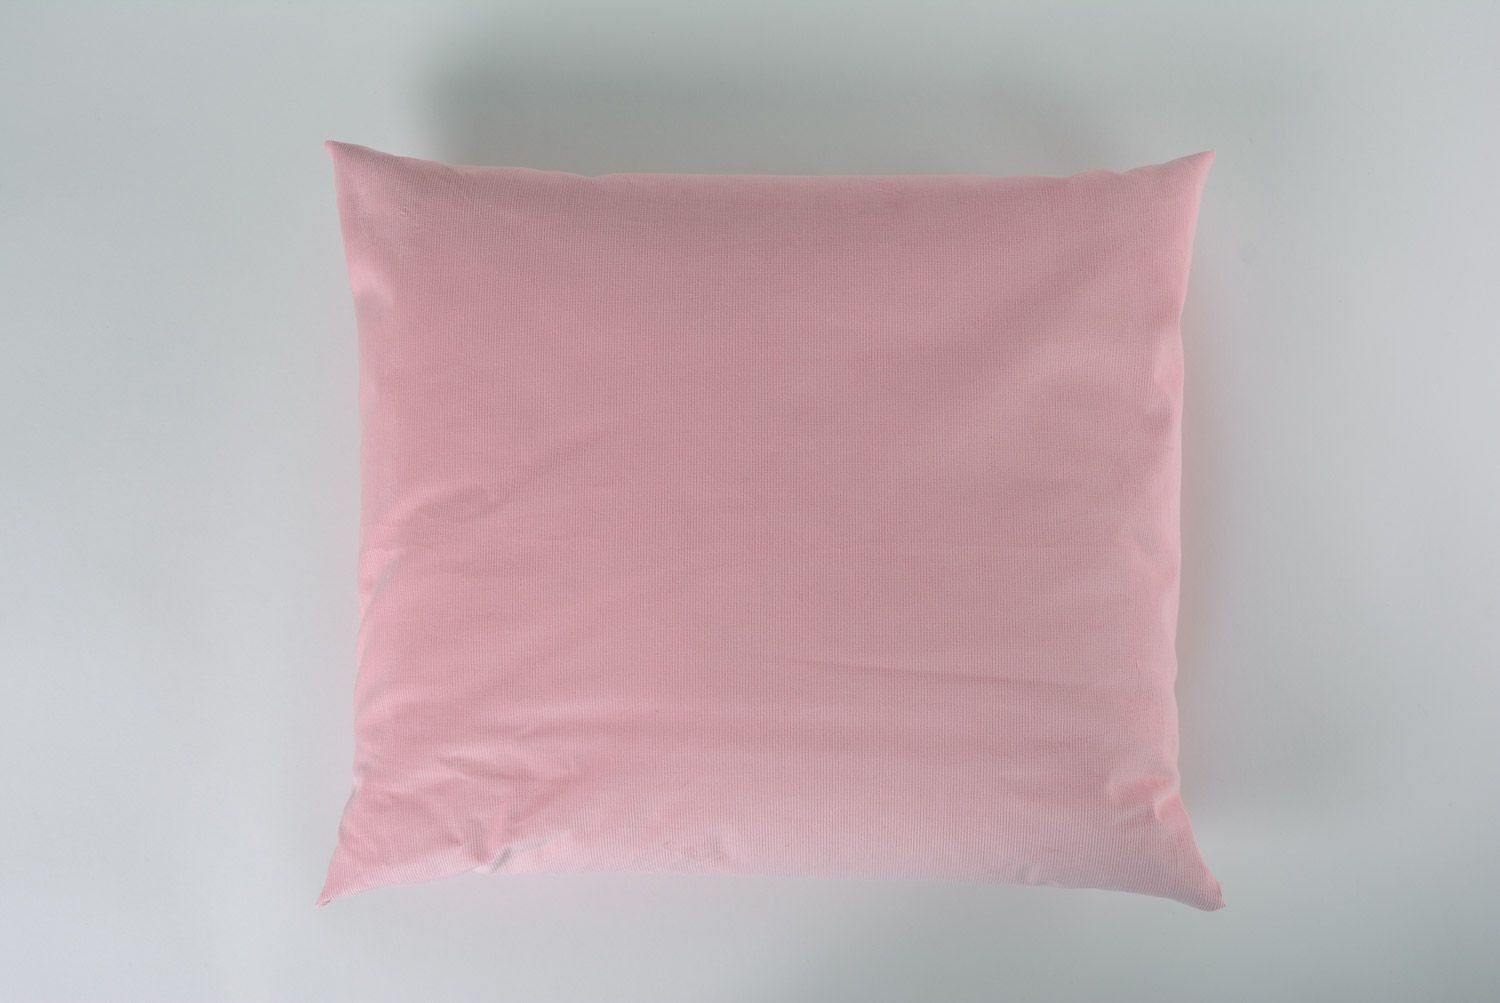 Pink handmade tray cushion made of velvet and acrylic fabric interior decor photo 5